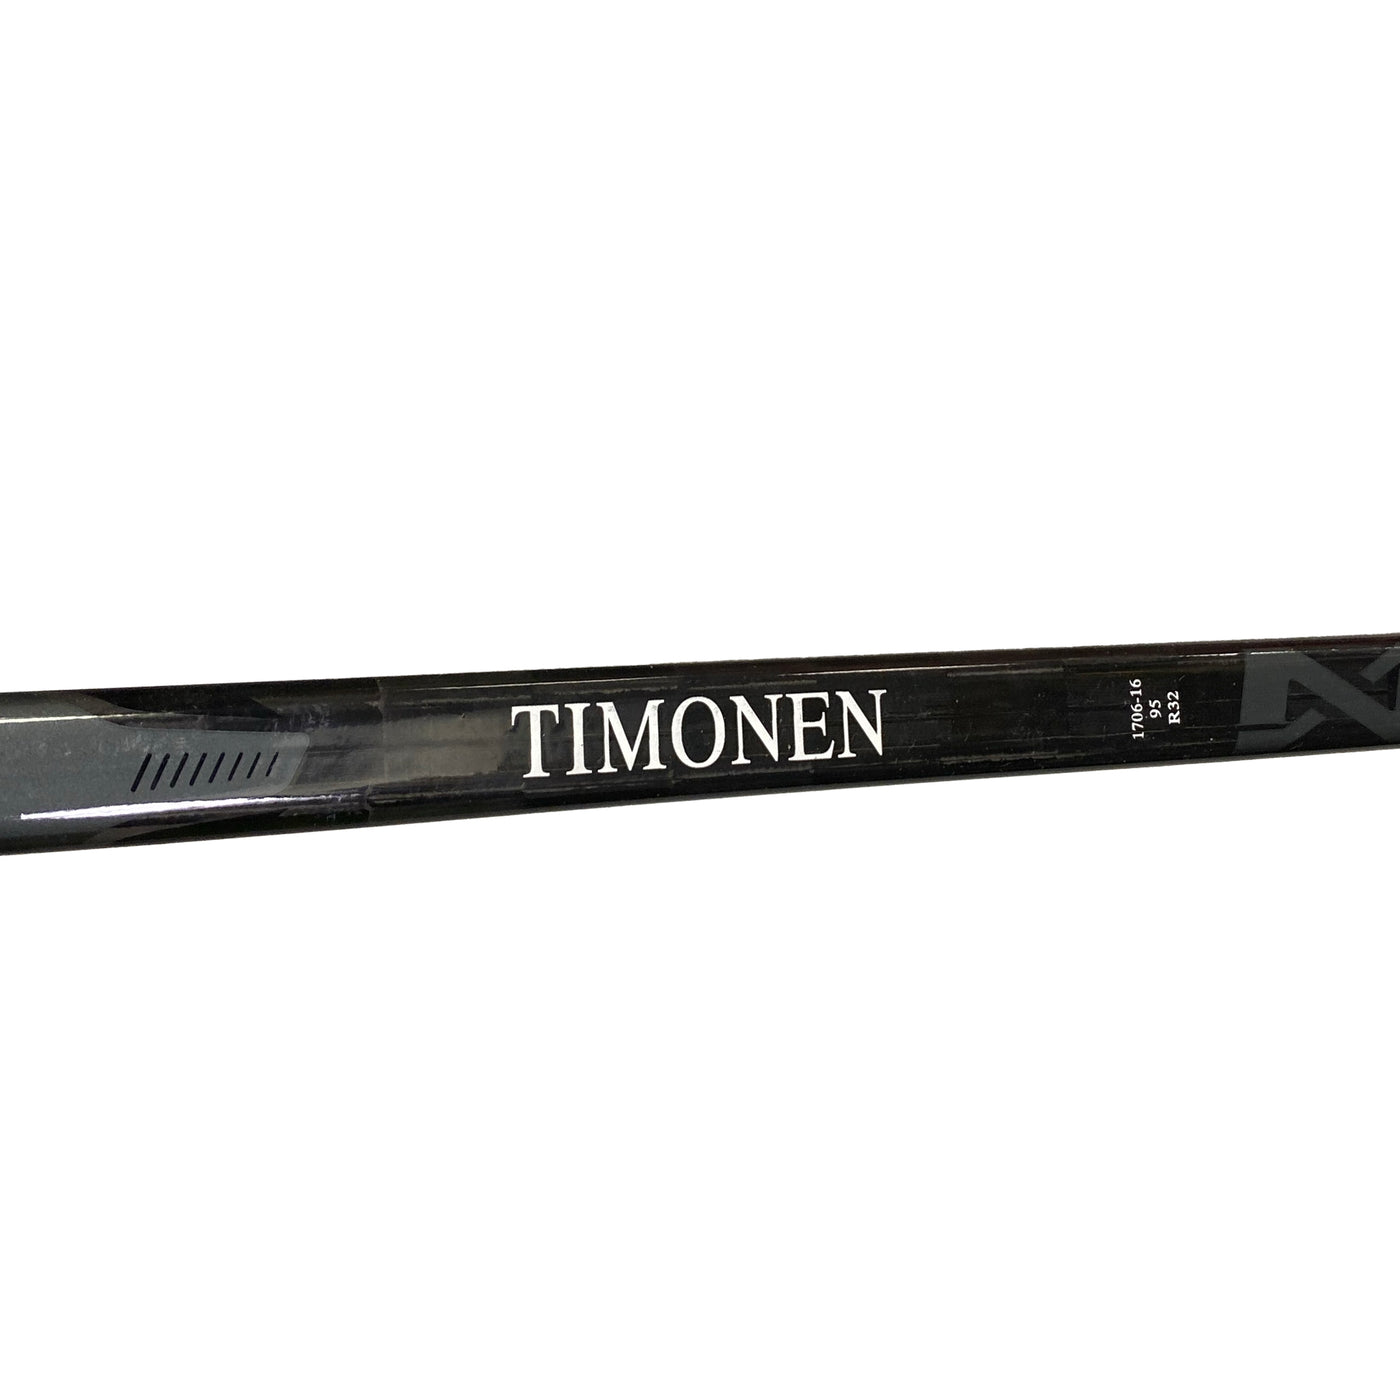 Bauer Nexus 8000 - Pro Stock Hockey Stick - Kimmo Timonen